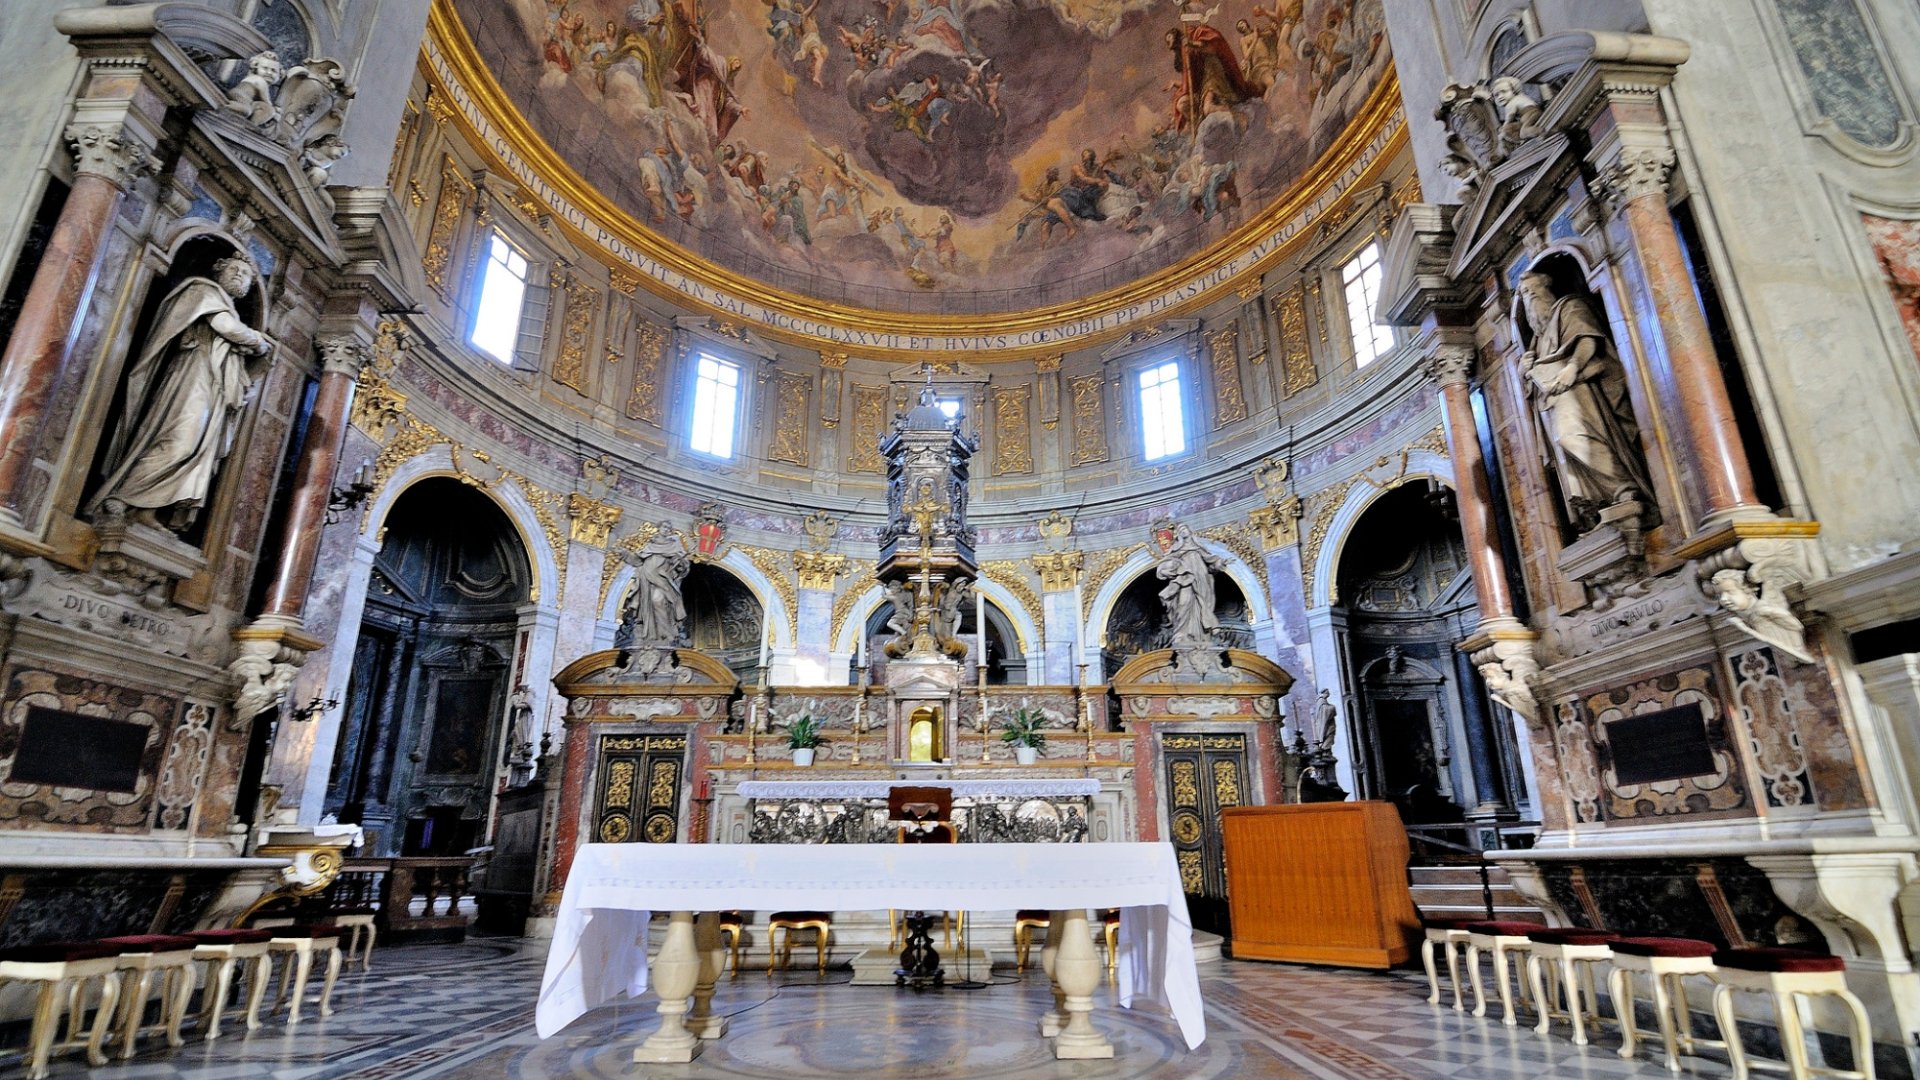 Santissima Annunziata church in Florence